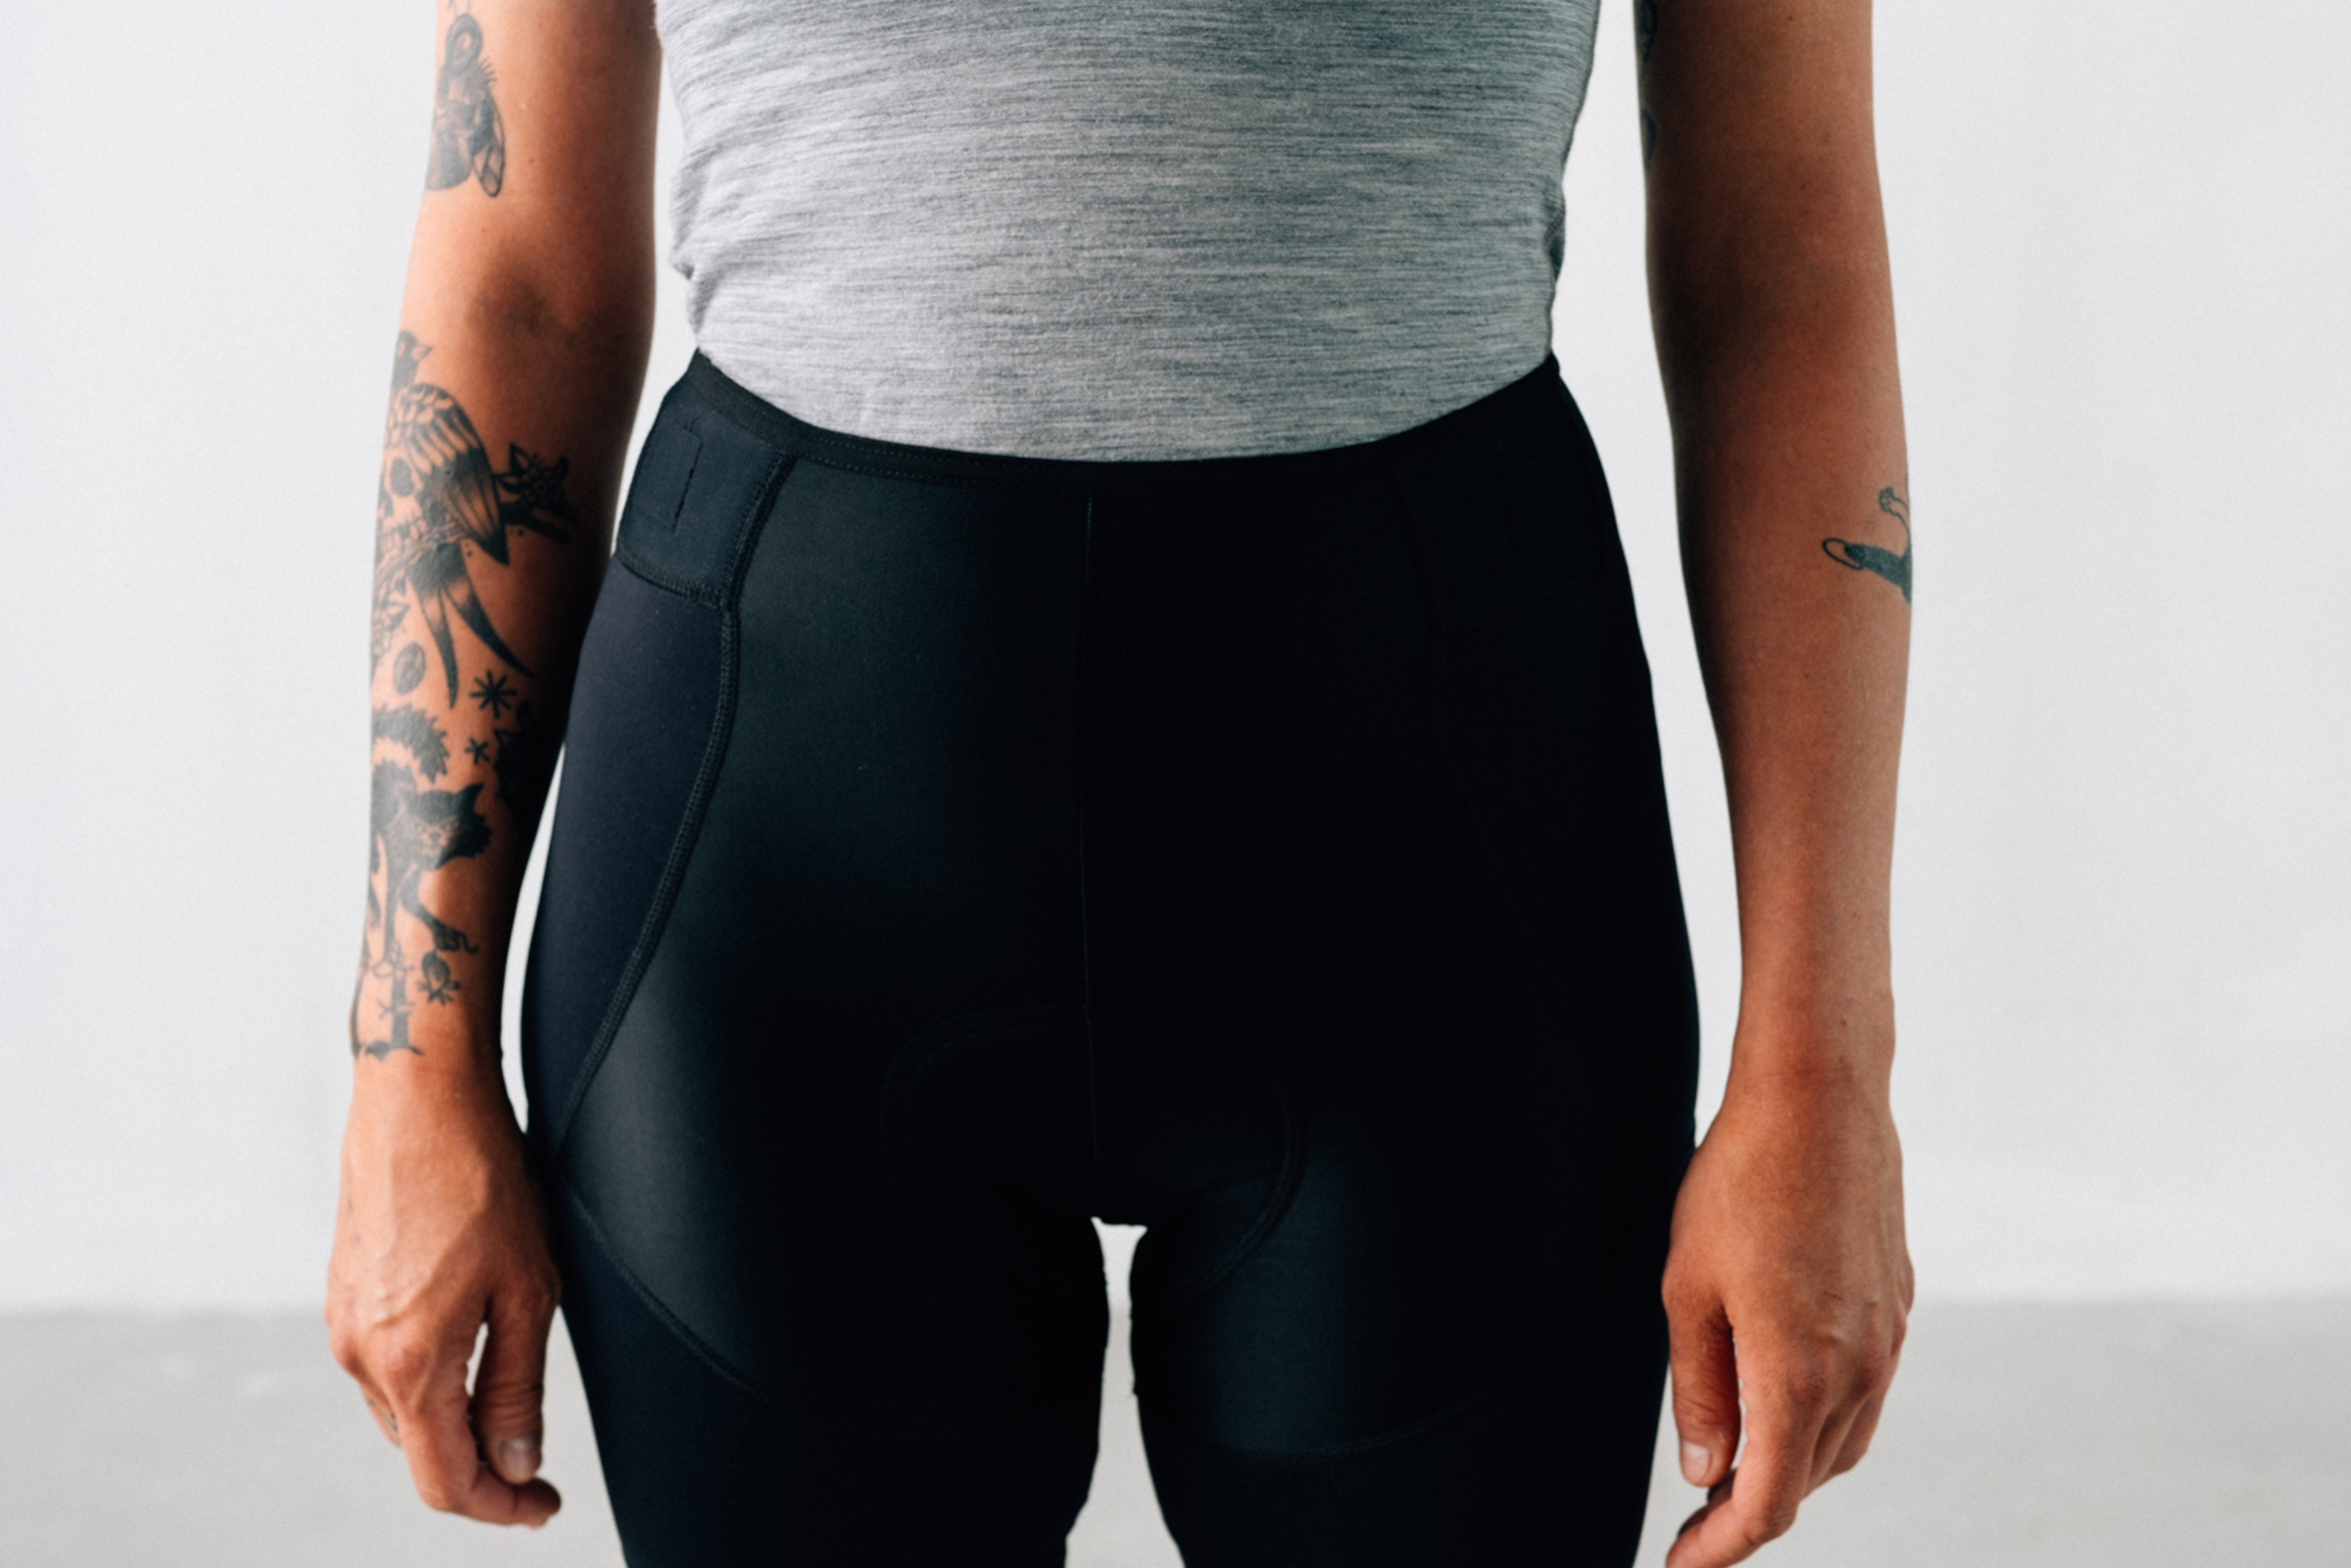 Women's Signature Clippee System Bib Shorts 1.0